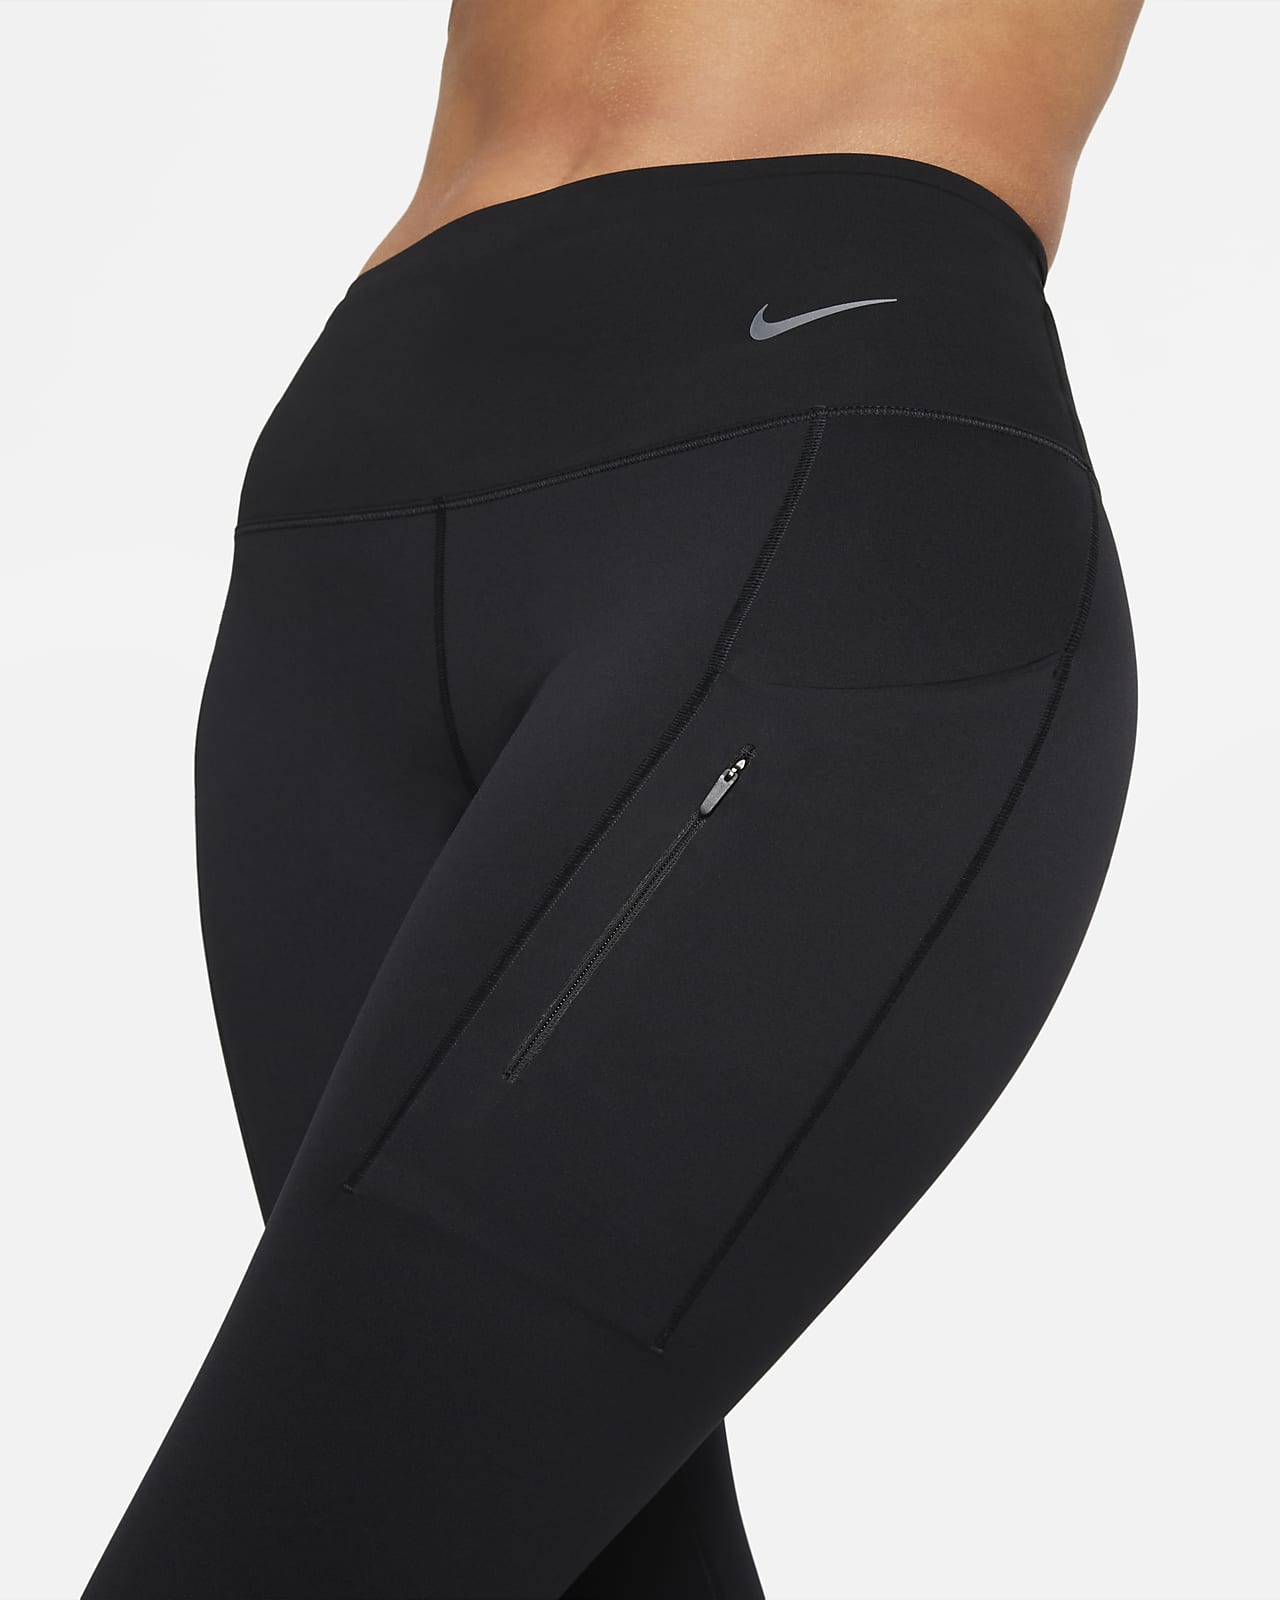 Nike Running Cropped Leggings Tight Pants Womens Small Black Dri